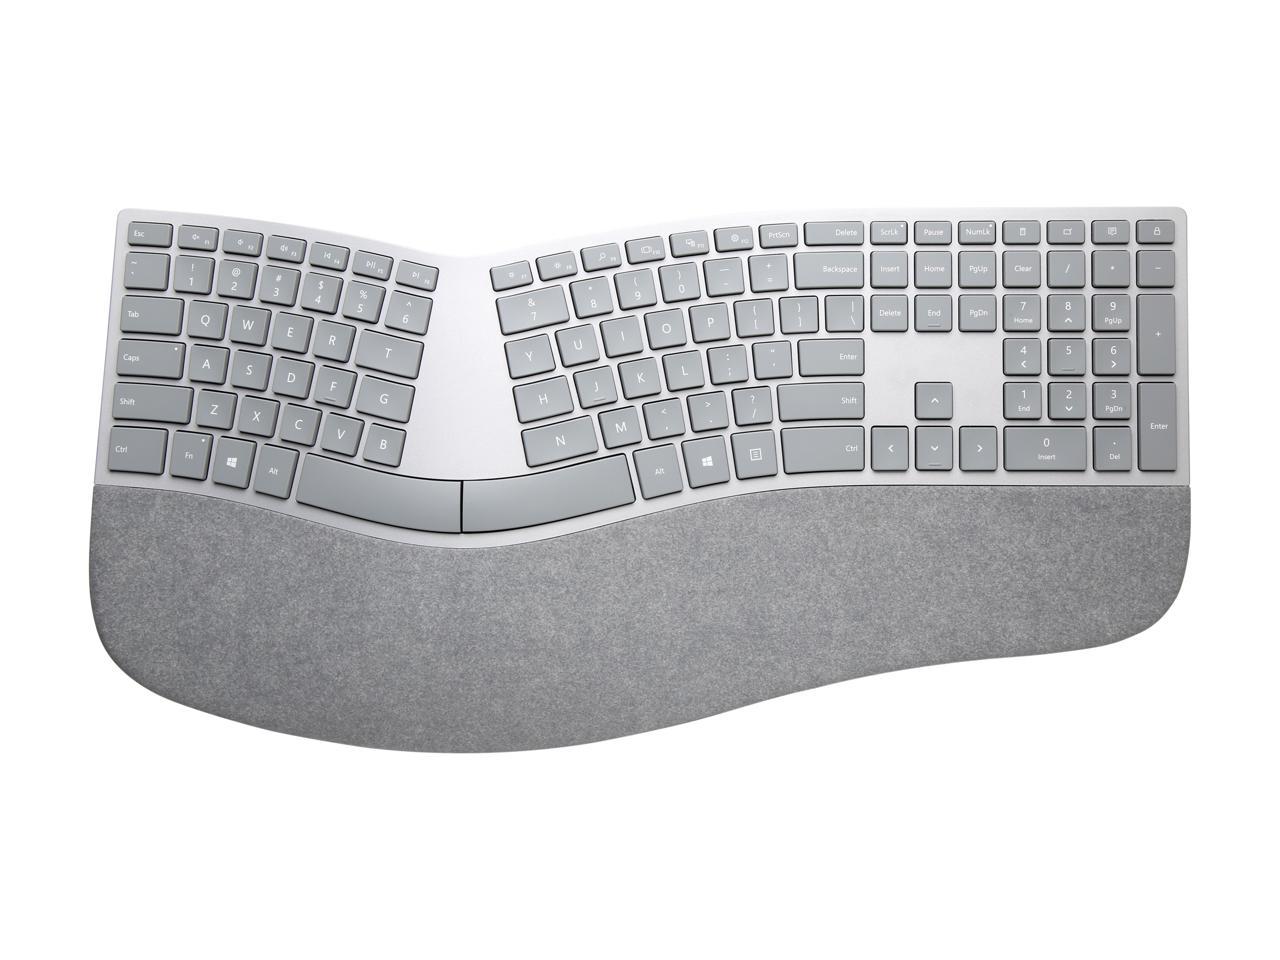 microsoft ergonomic keyboard macos